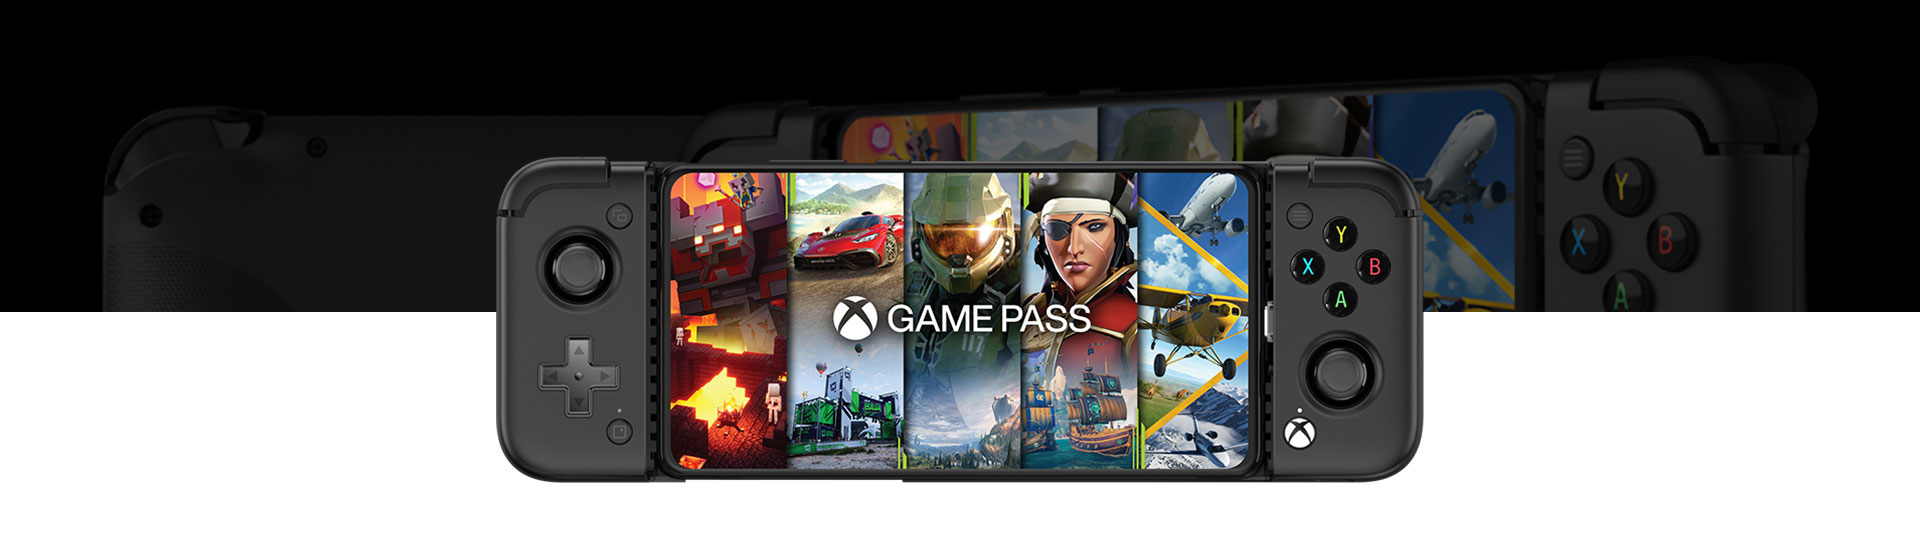 Game Pass 화면이 표시된 Android용 GameSir X2 Pro 모바일 게임 컨트롤러를 앞에서 본 모습